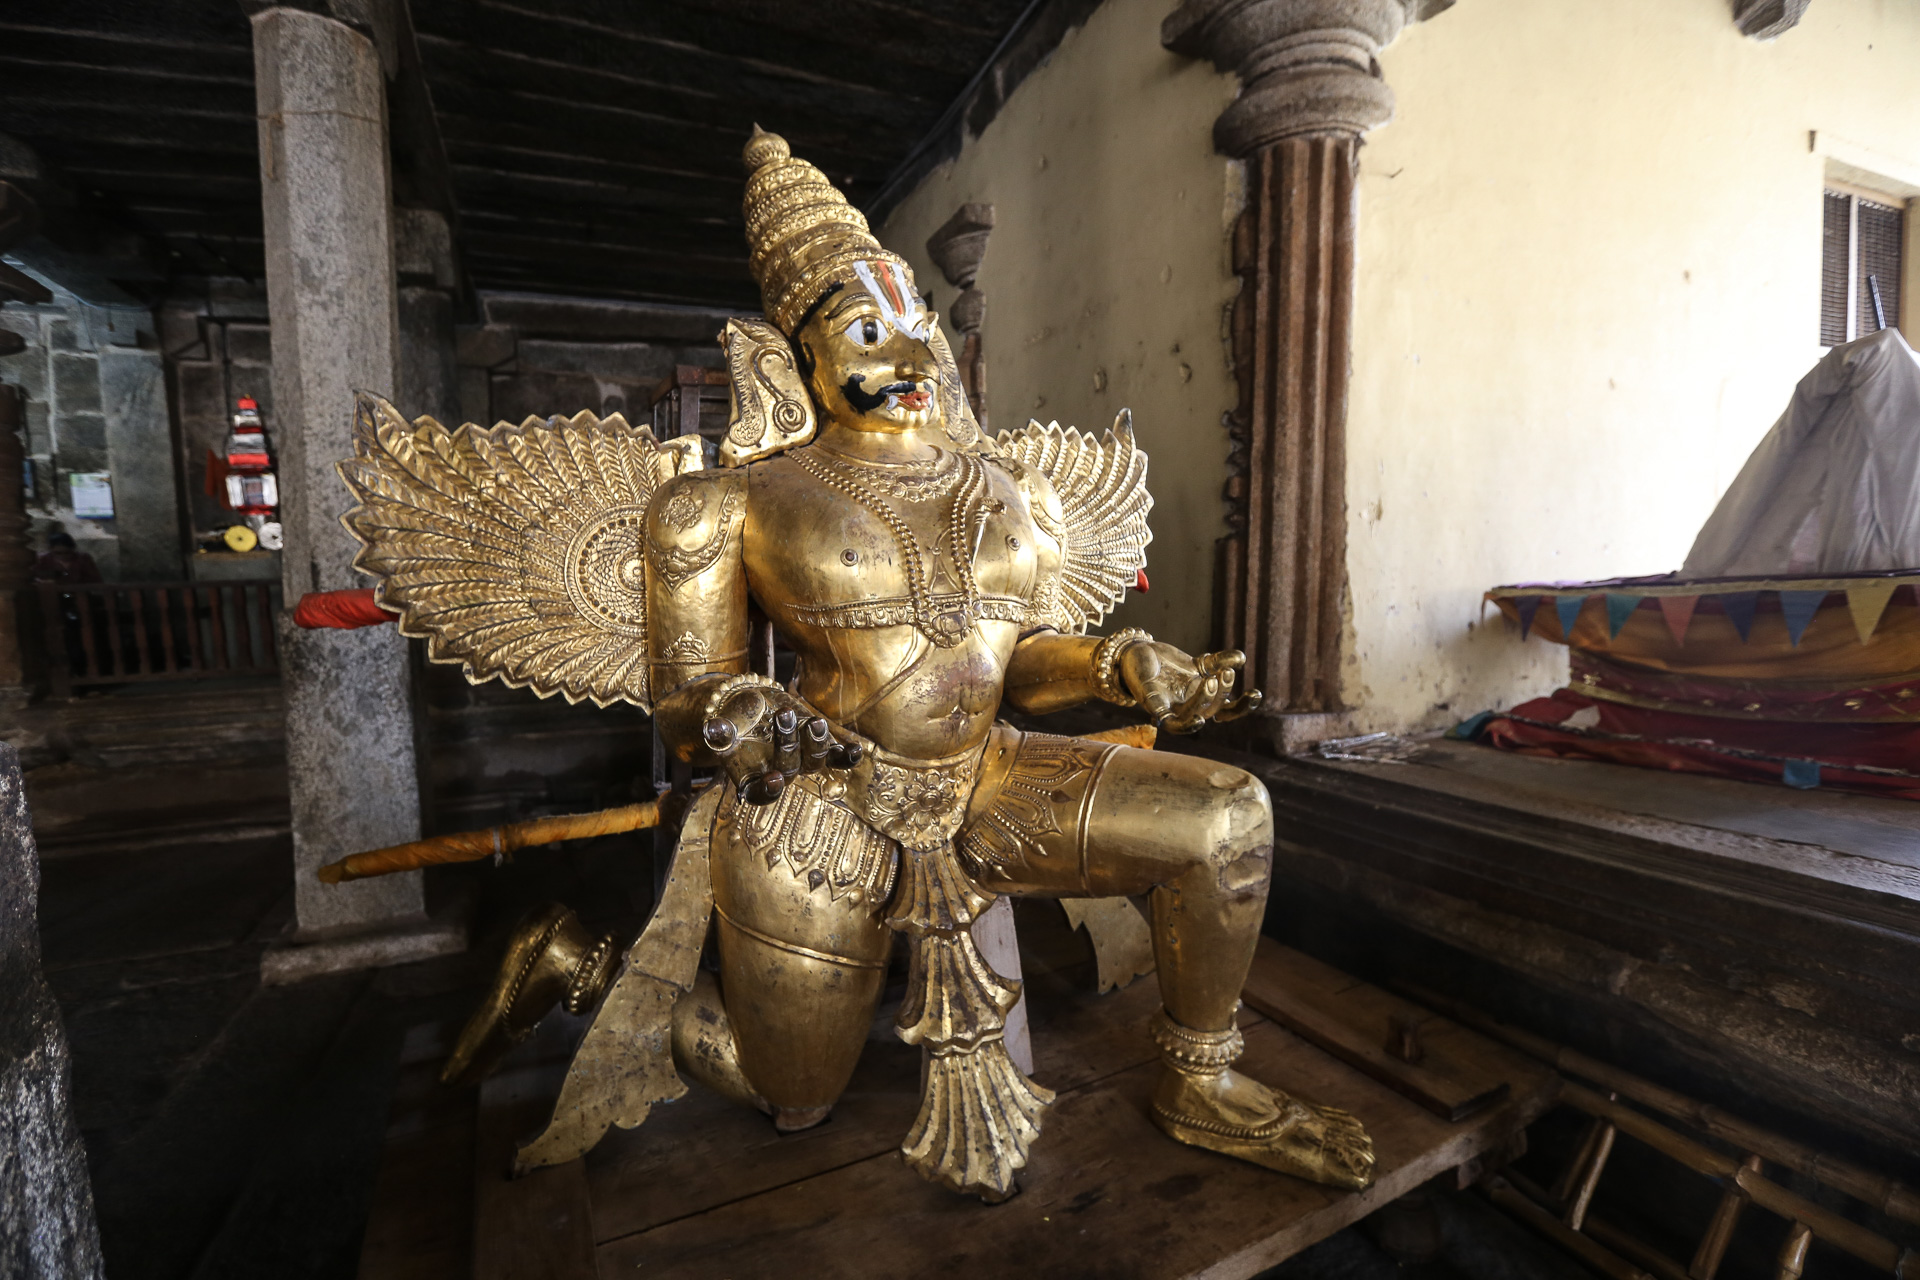 Une statue de Garuda, transporteur officiel de Vishnu